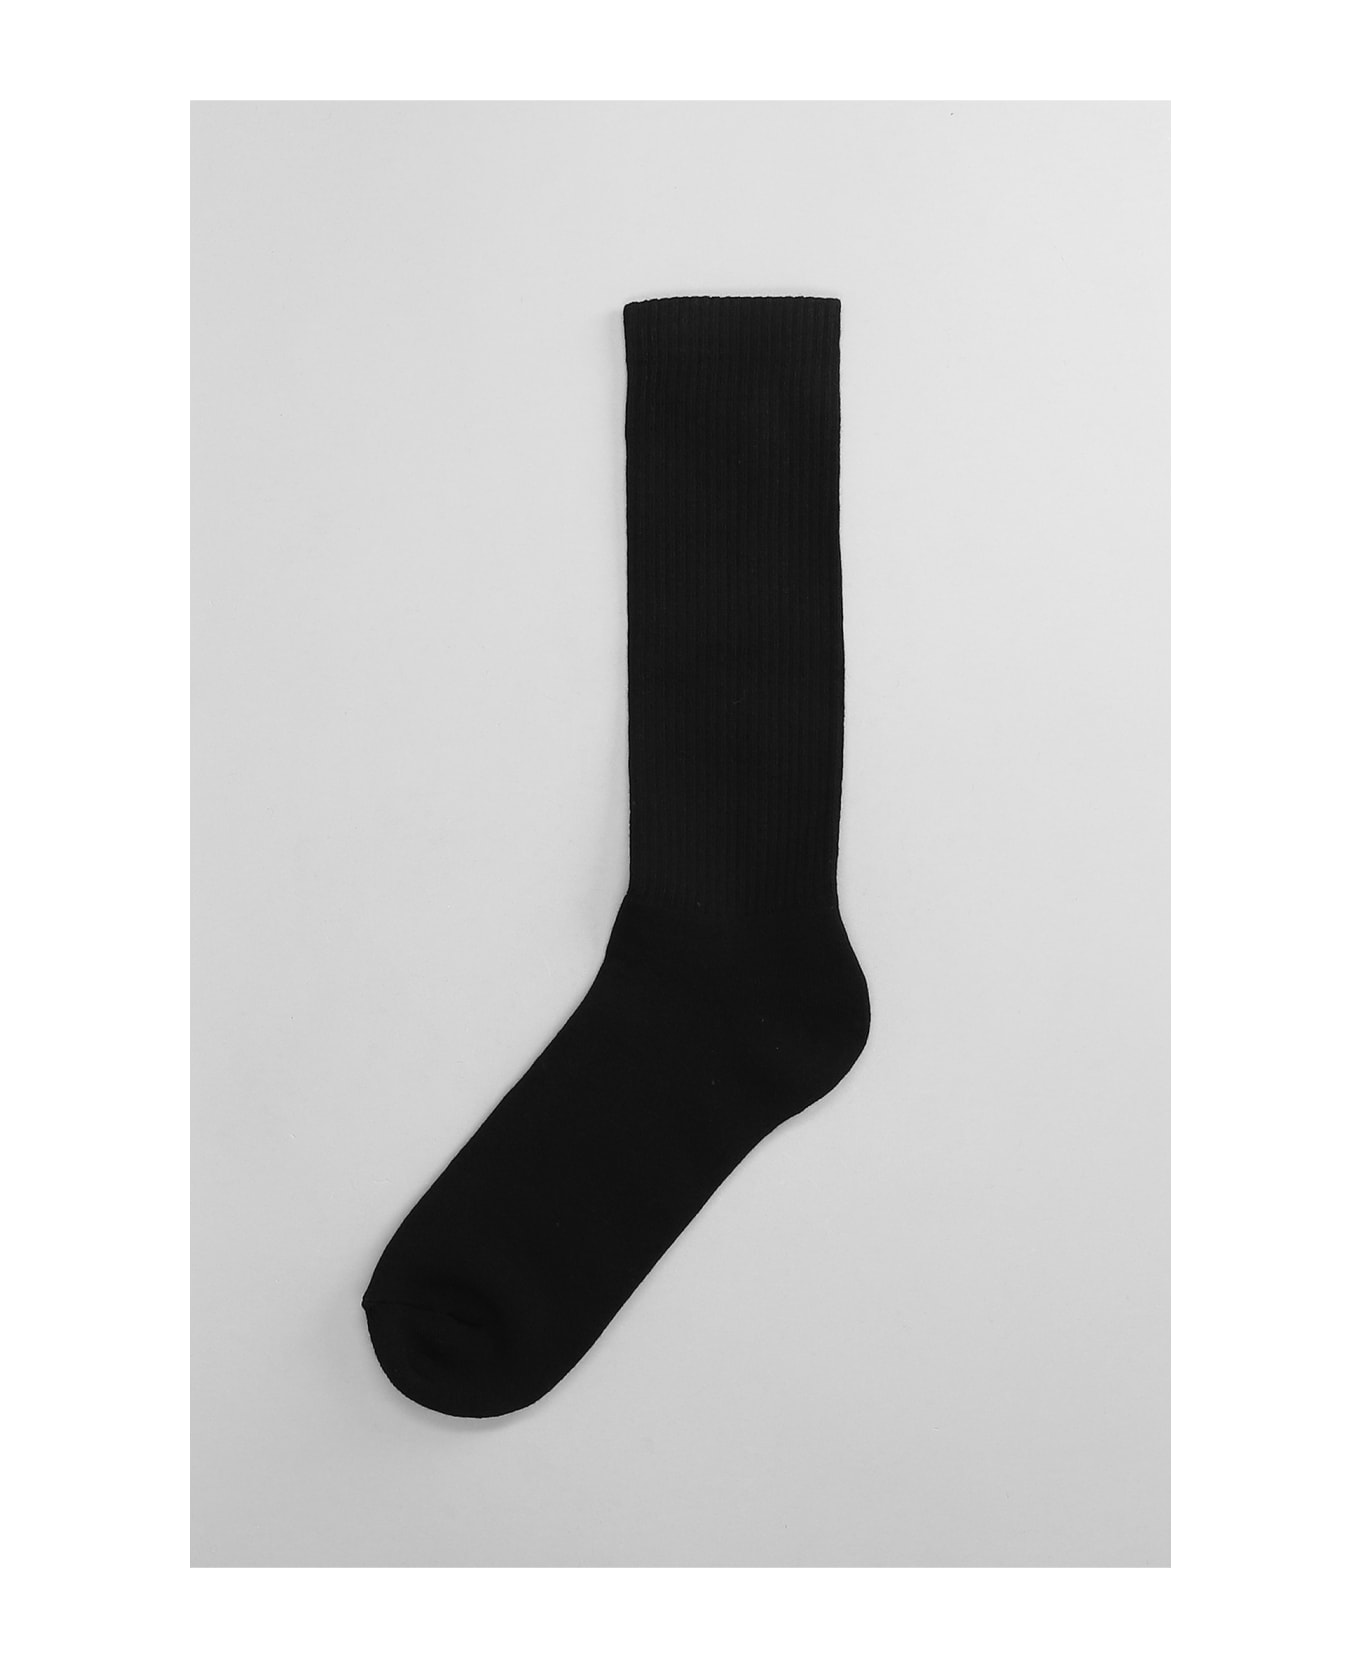 Palm Angels Classic Logo Socks - Black White